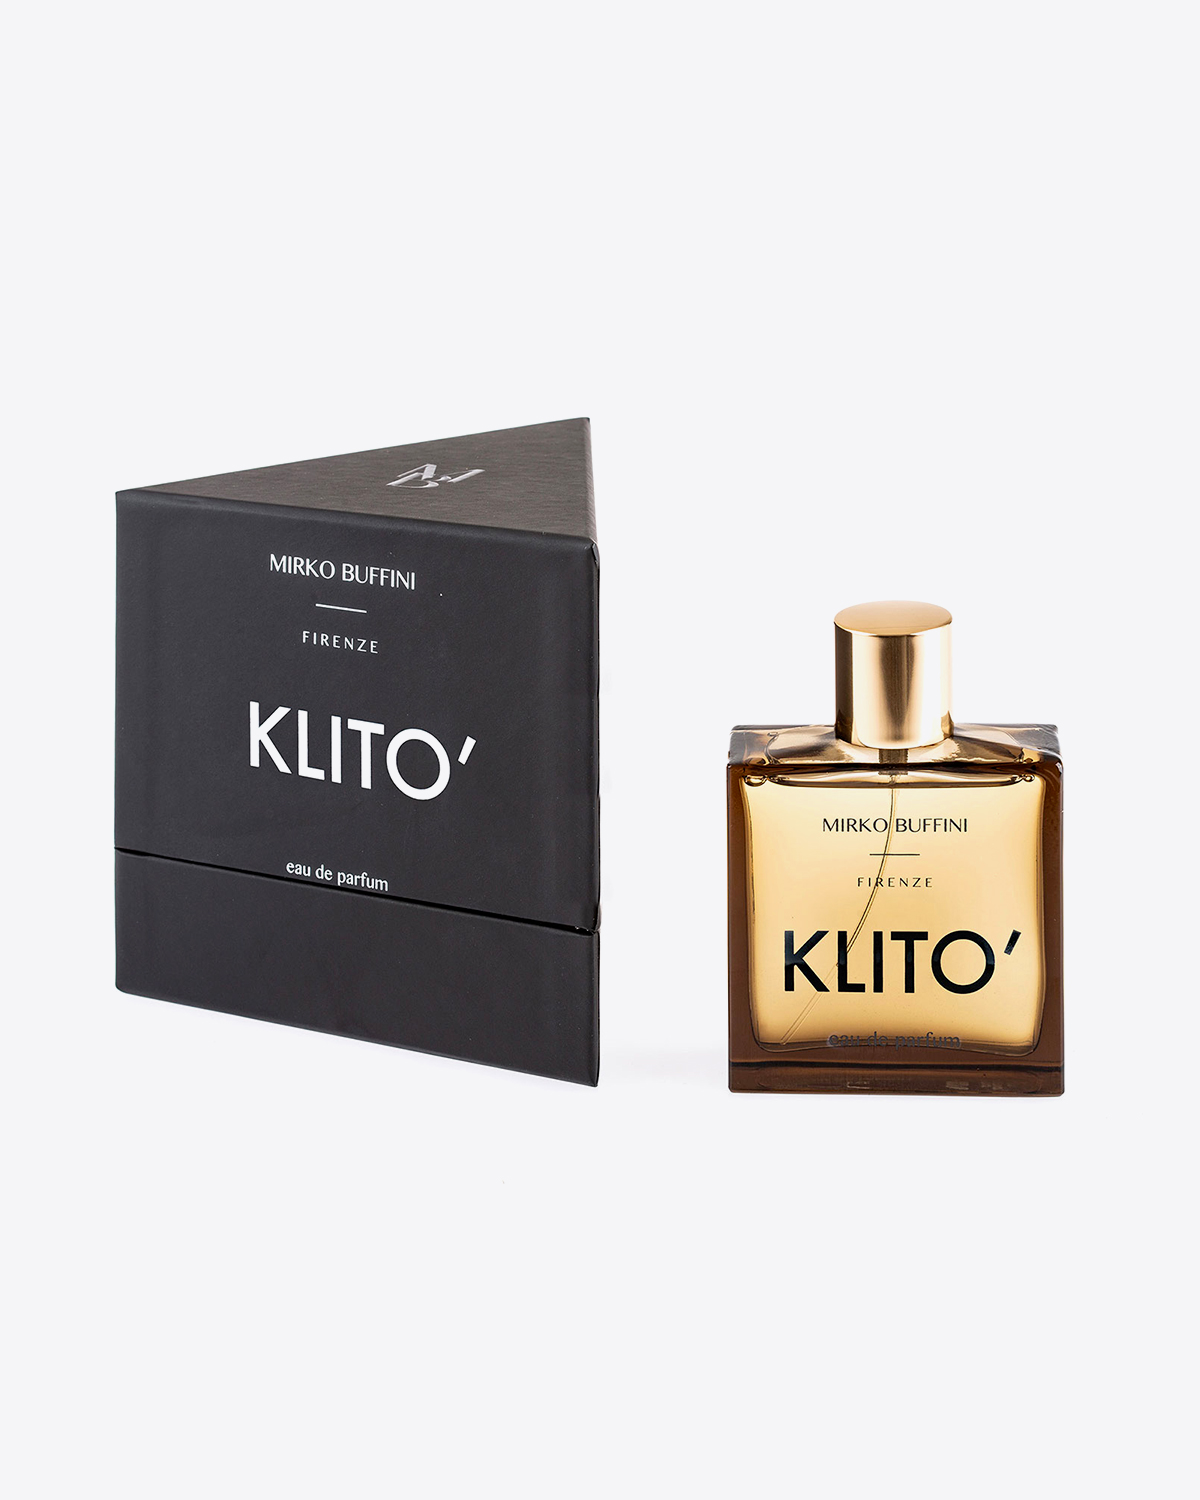 Parfum Klito Mirko Buffini. Flacon de 30 ml vendu dans sa boite triangulaire noire. Collection Balck.